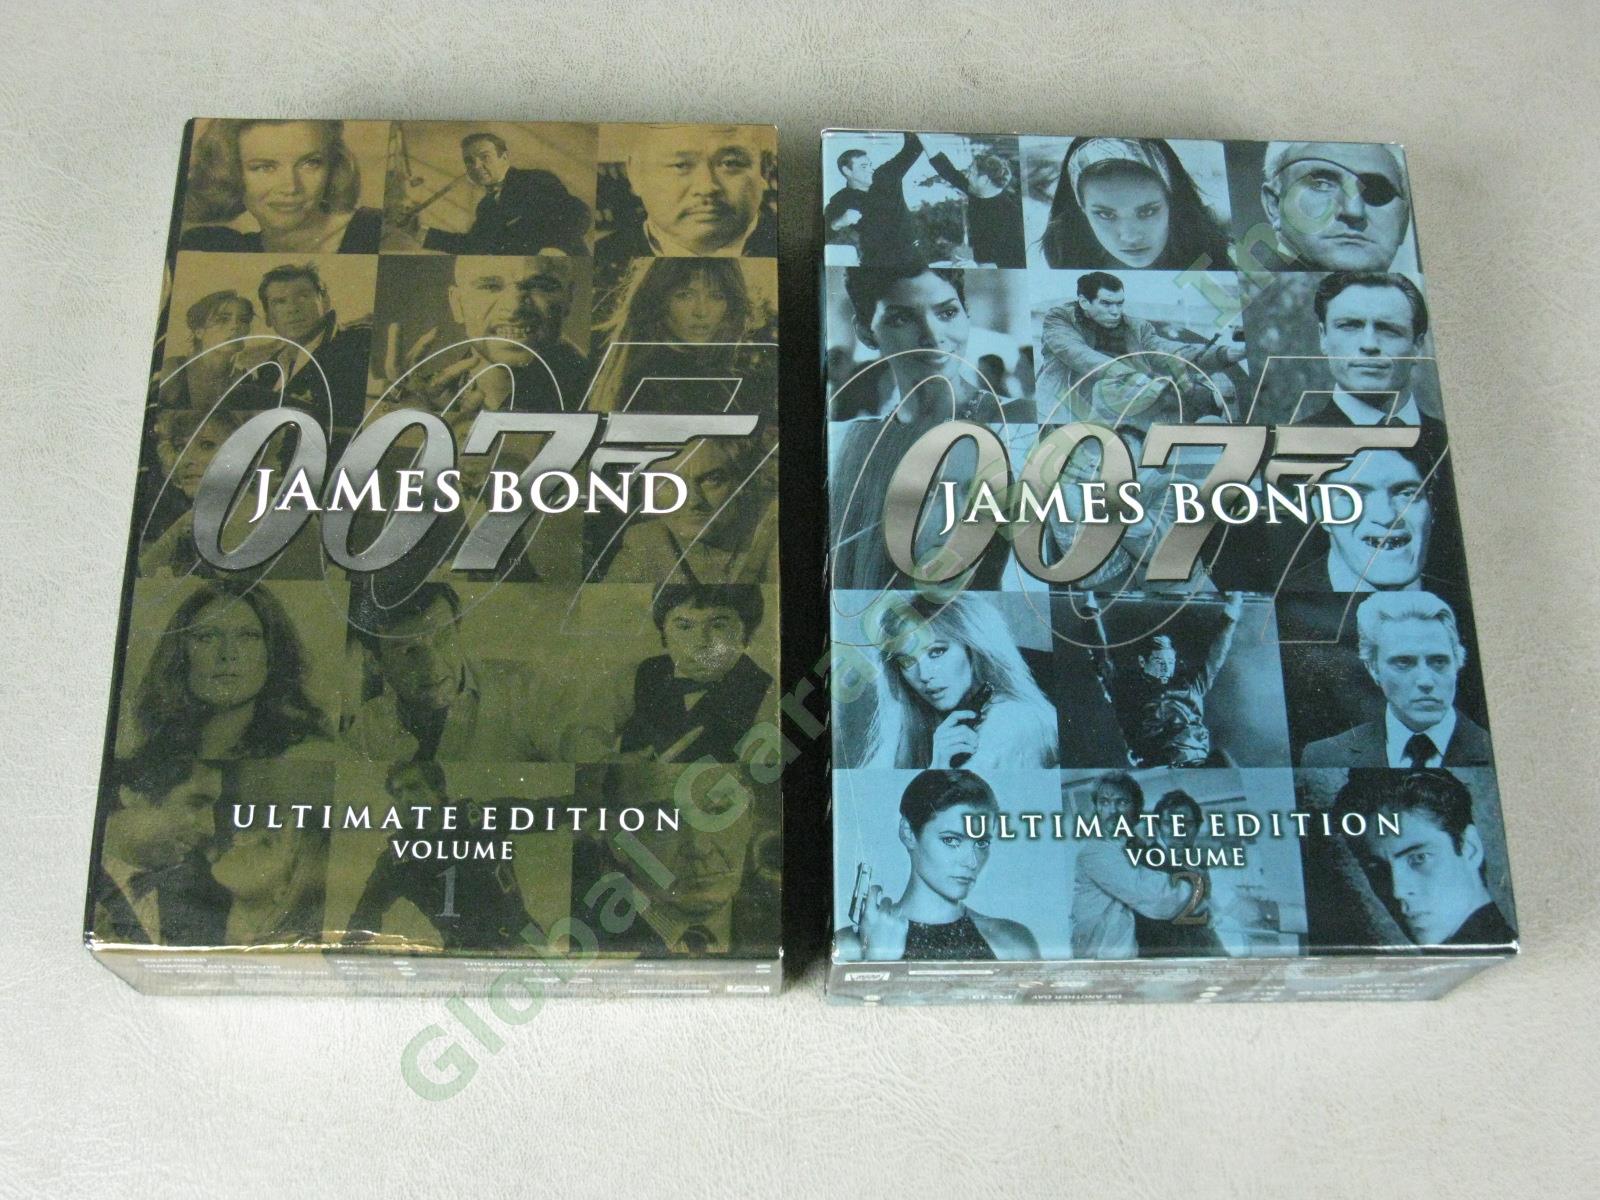 007 James Bond 46-DVD Collection Lot Ultimate Edition Box Sets Volume 1 2 3 4 NR 1